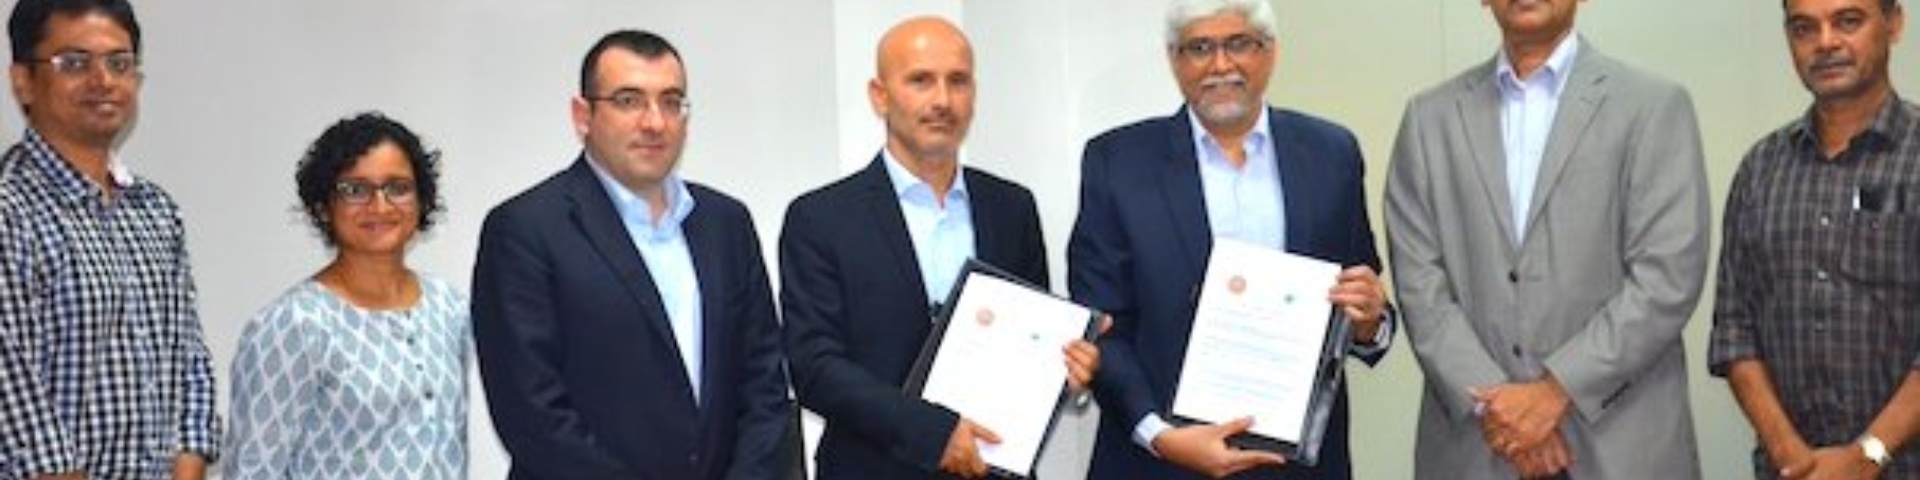 Sotacarbo-IITM Agreement